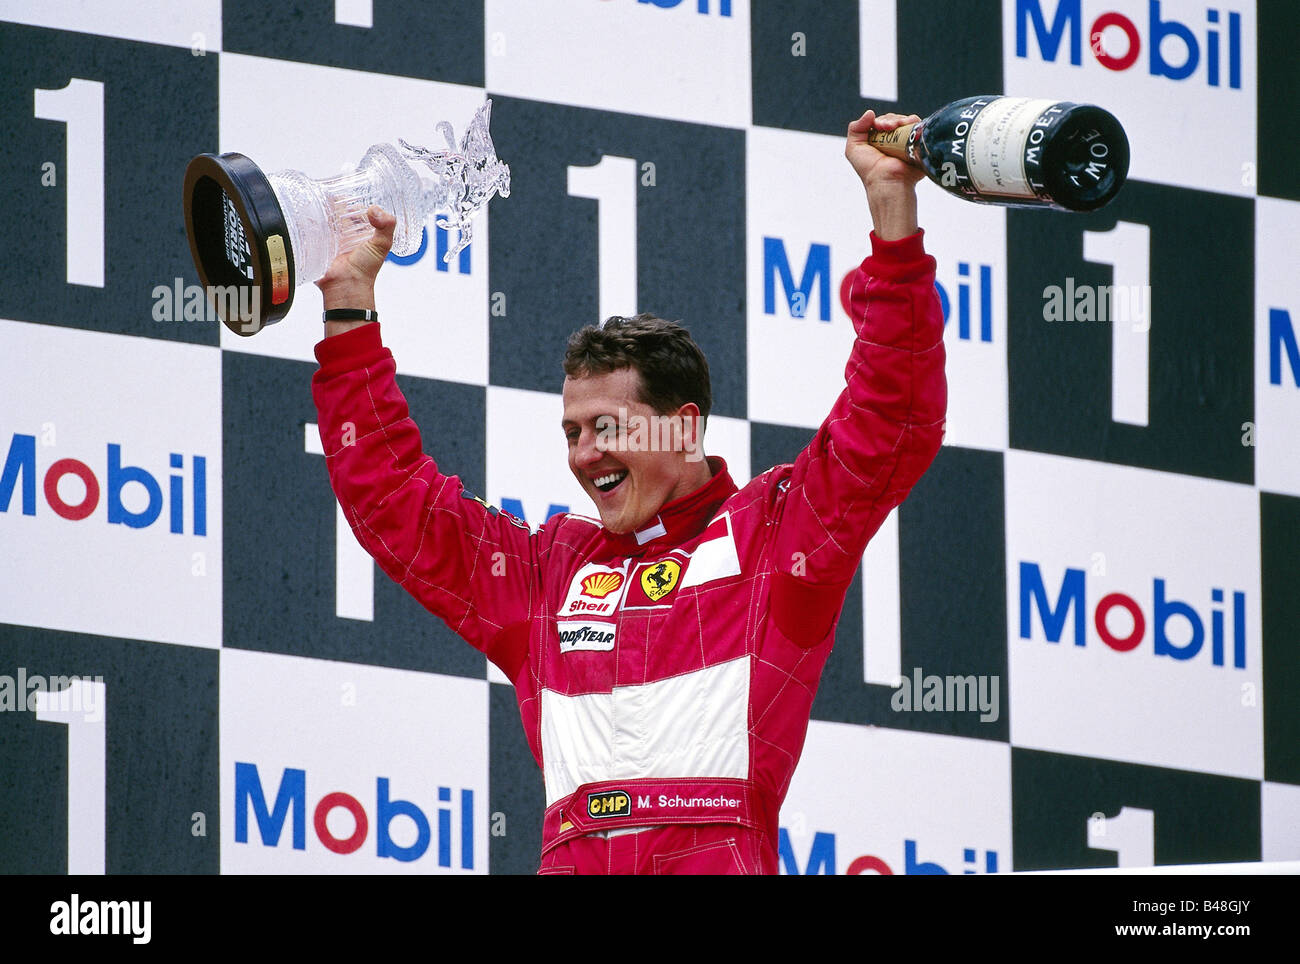 Schumacher, Michael, * 3.1.1969, German athlete (automobile racer), half length, Grand Prix Hockenheim, Germany, 1997, Stock Photo